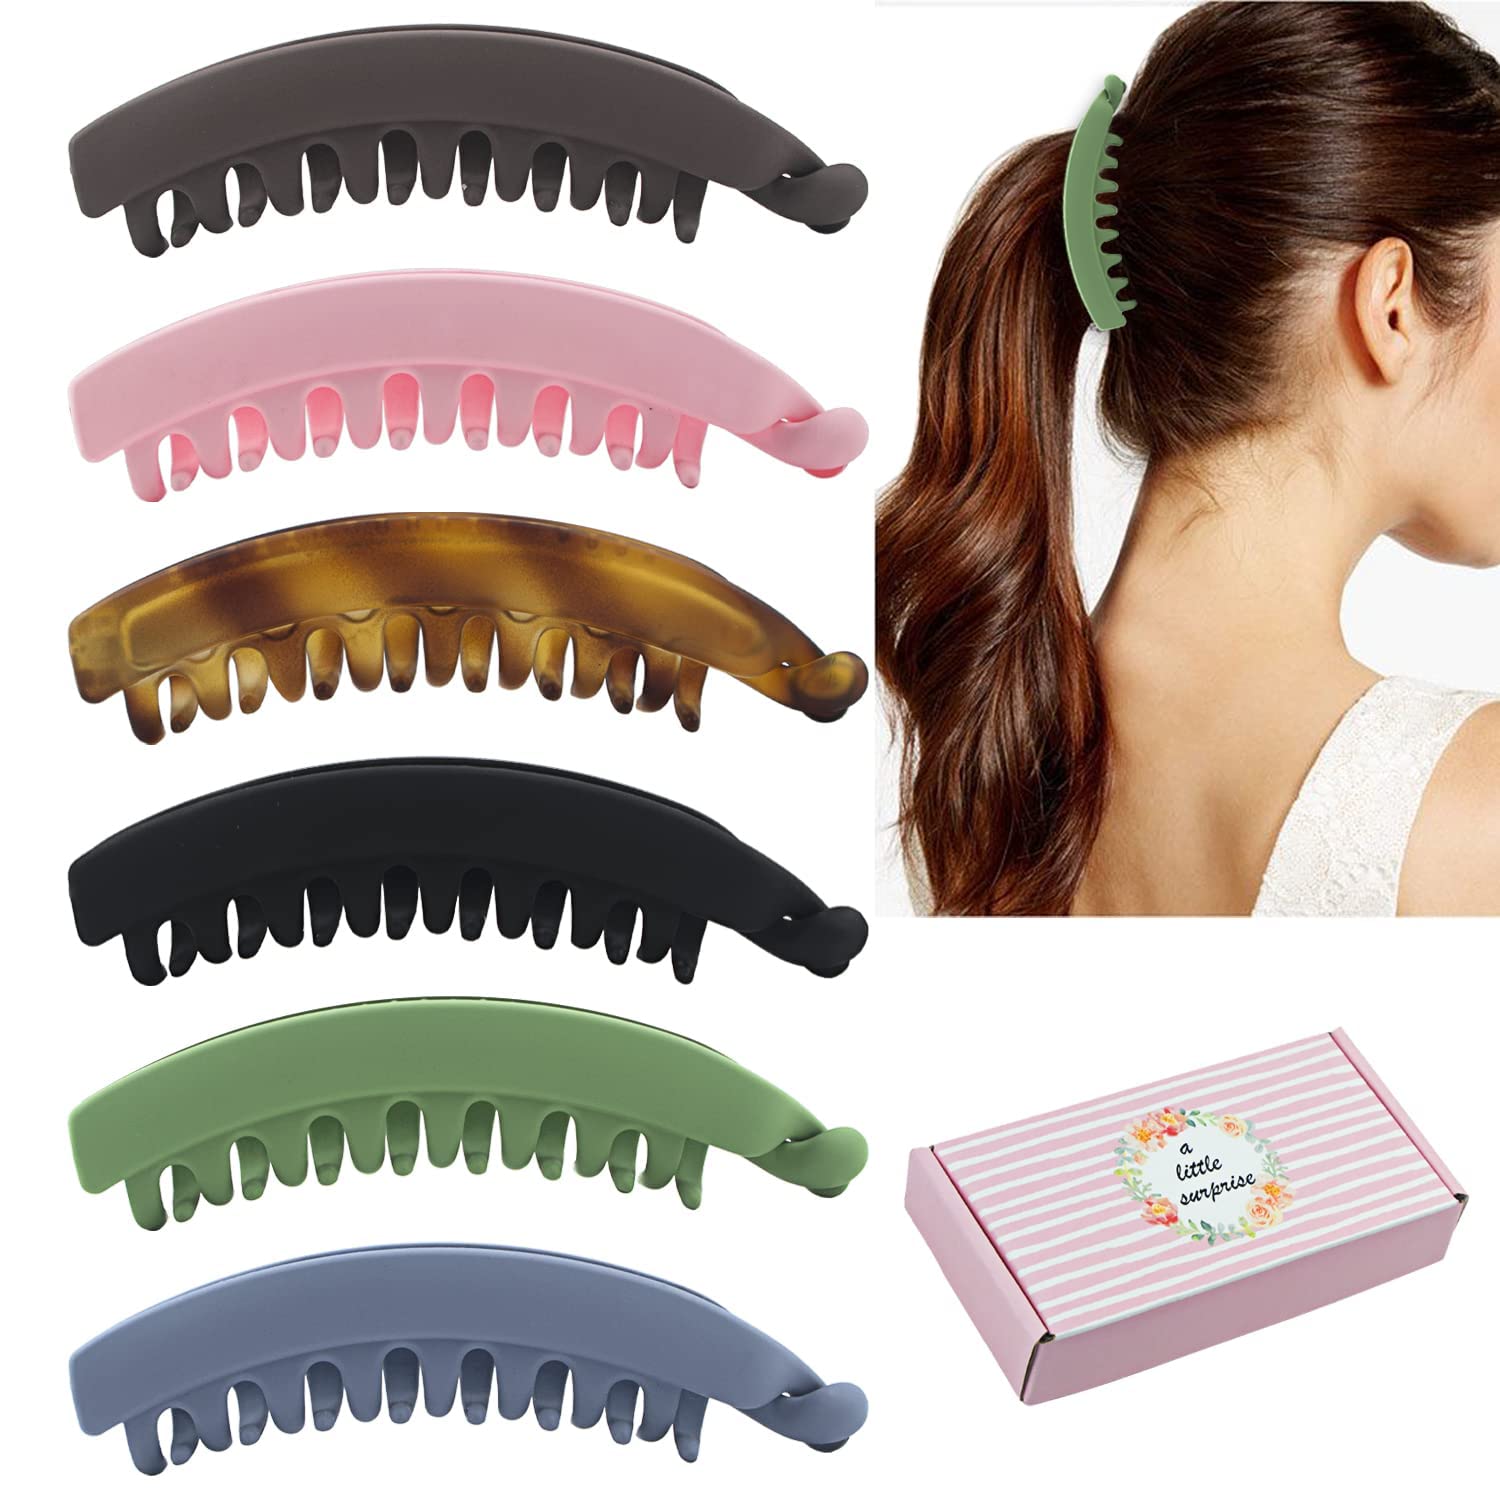 rubela store korean banana clip hair accessory for women and girls kids-35